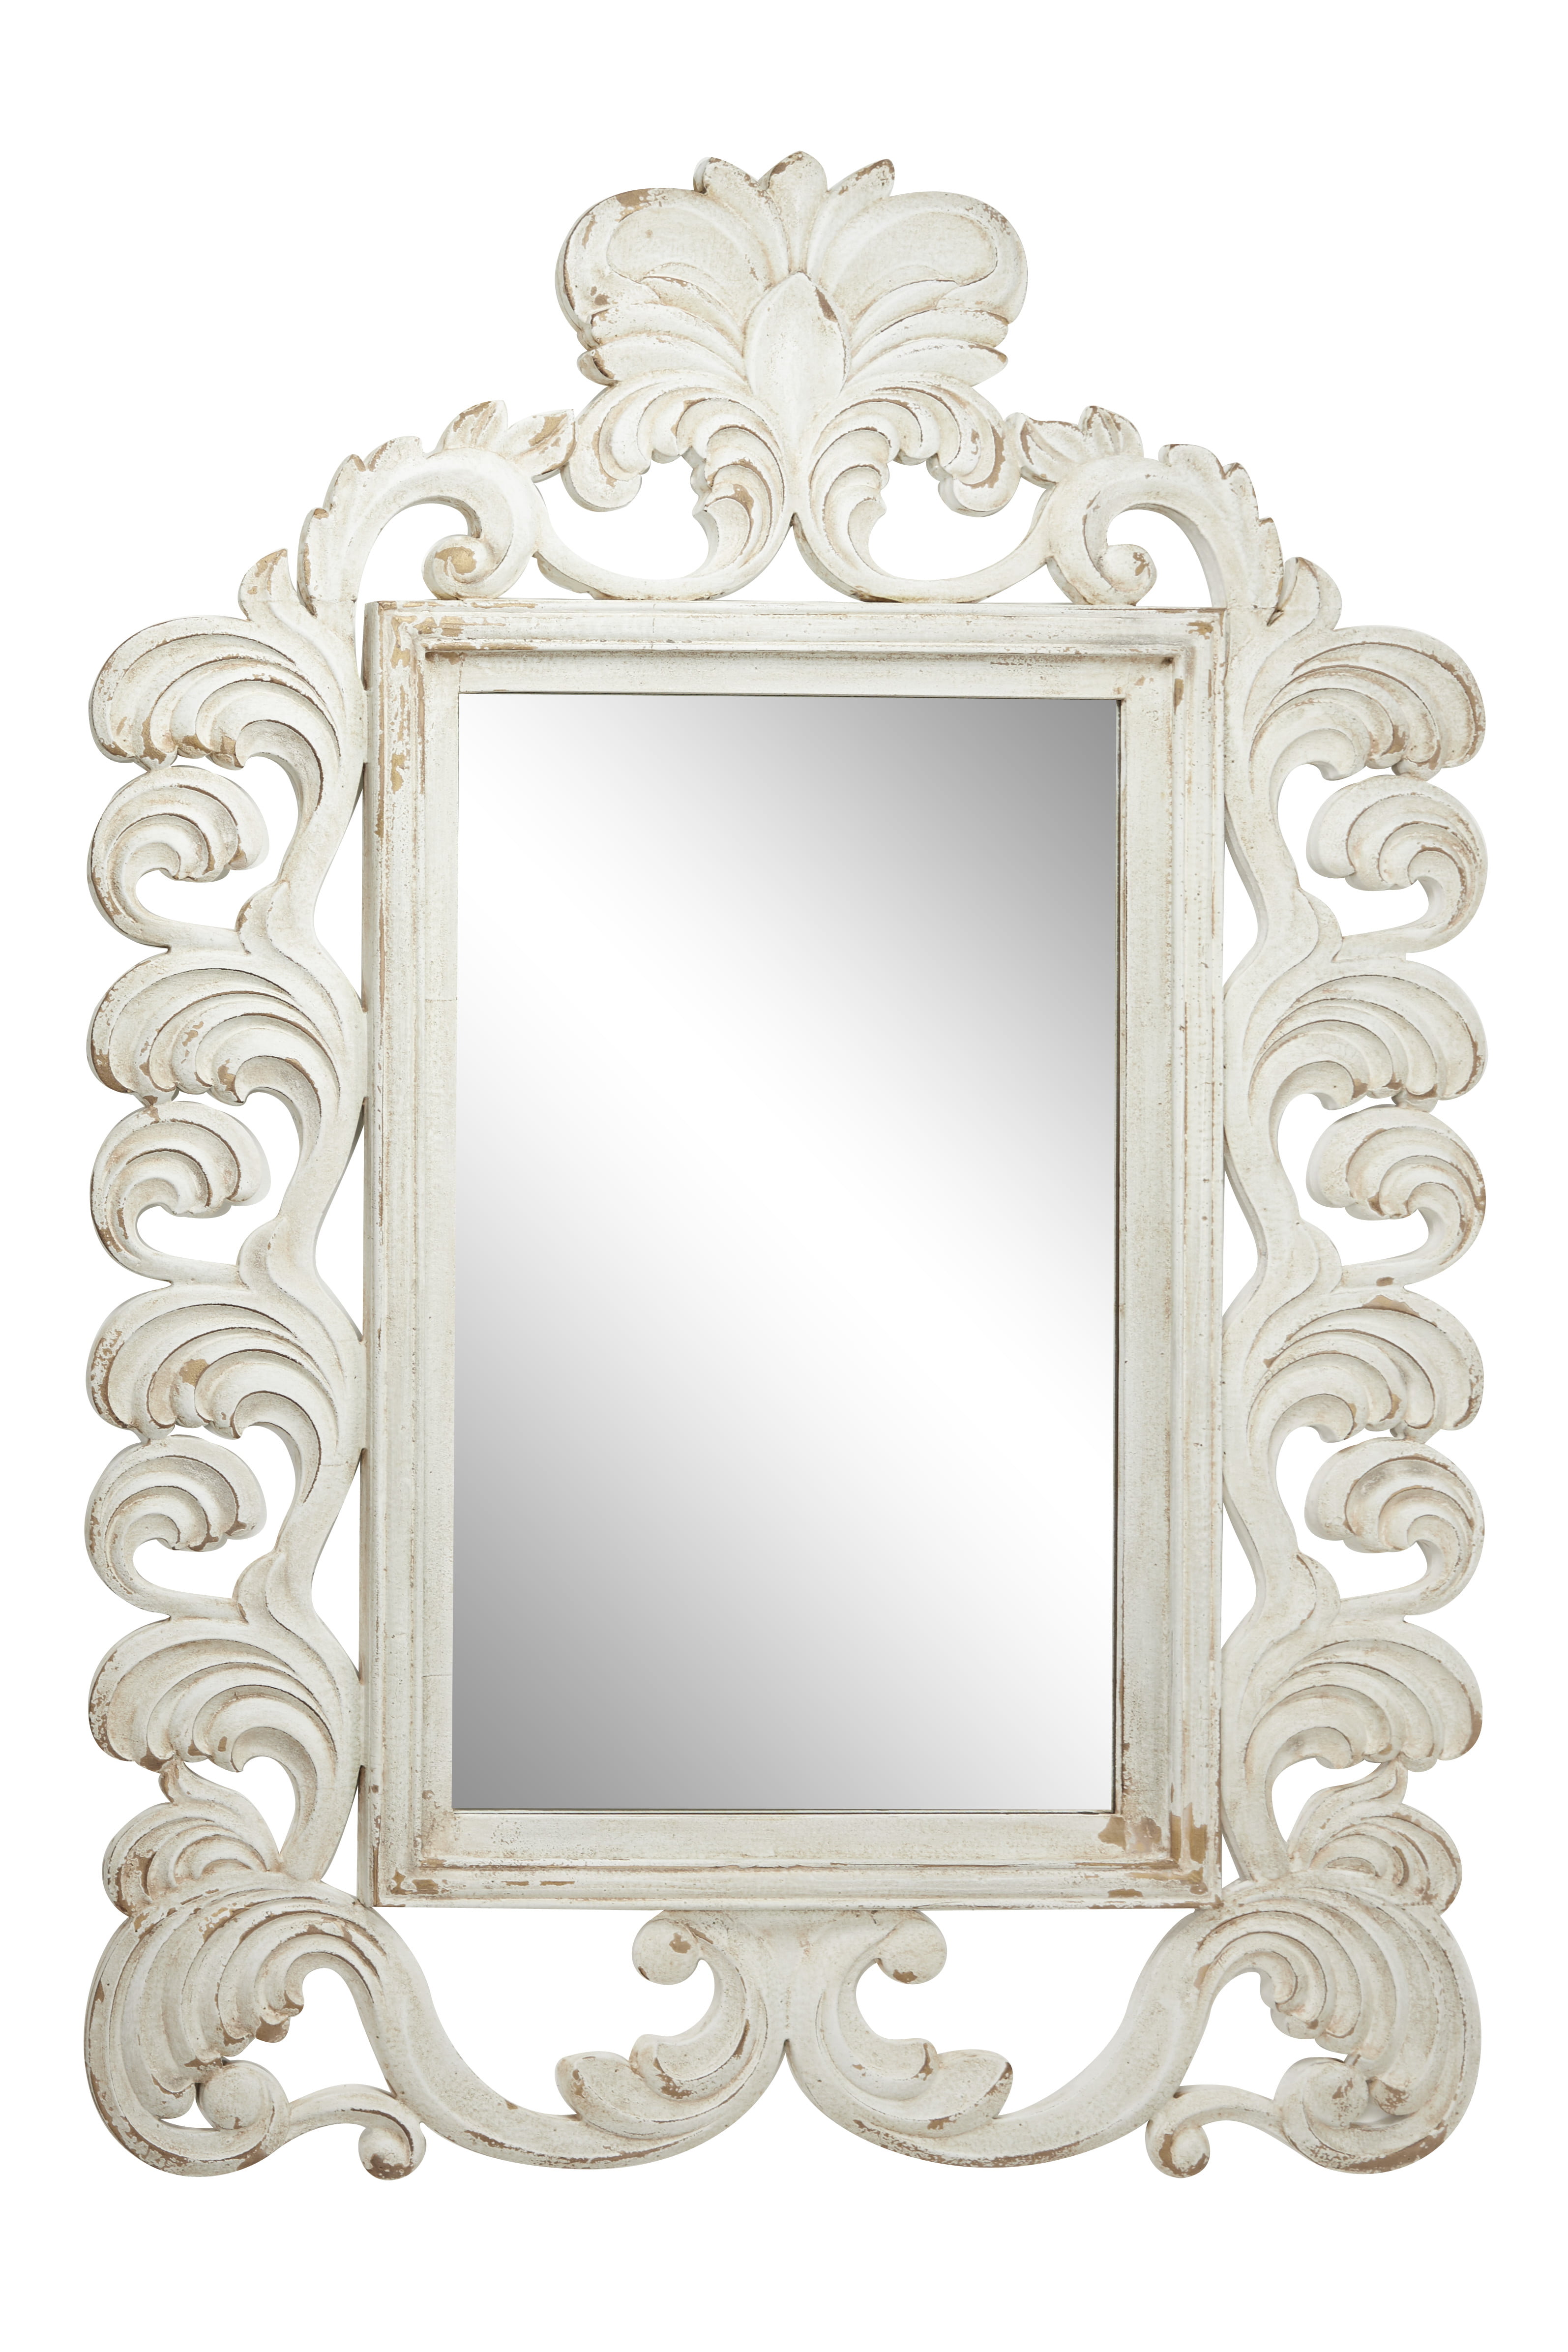 Carved Acanthus Design, Large White Rectangular Wall Mirror